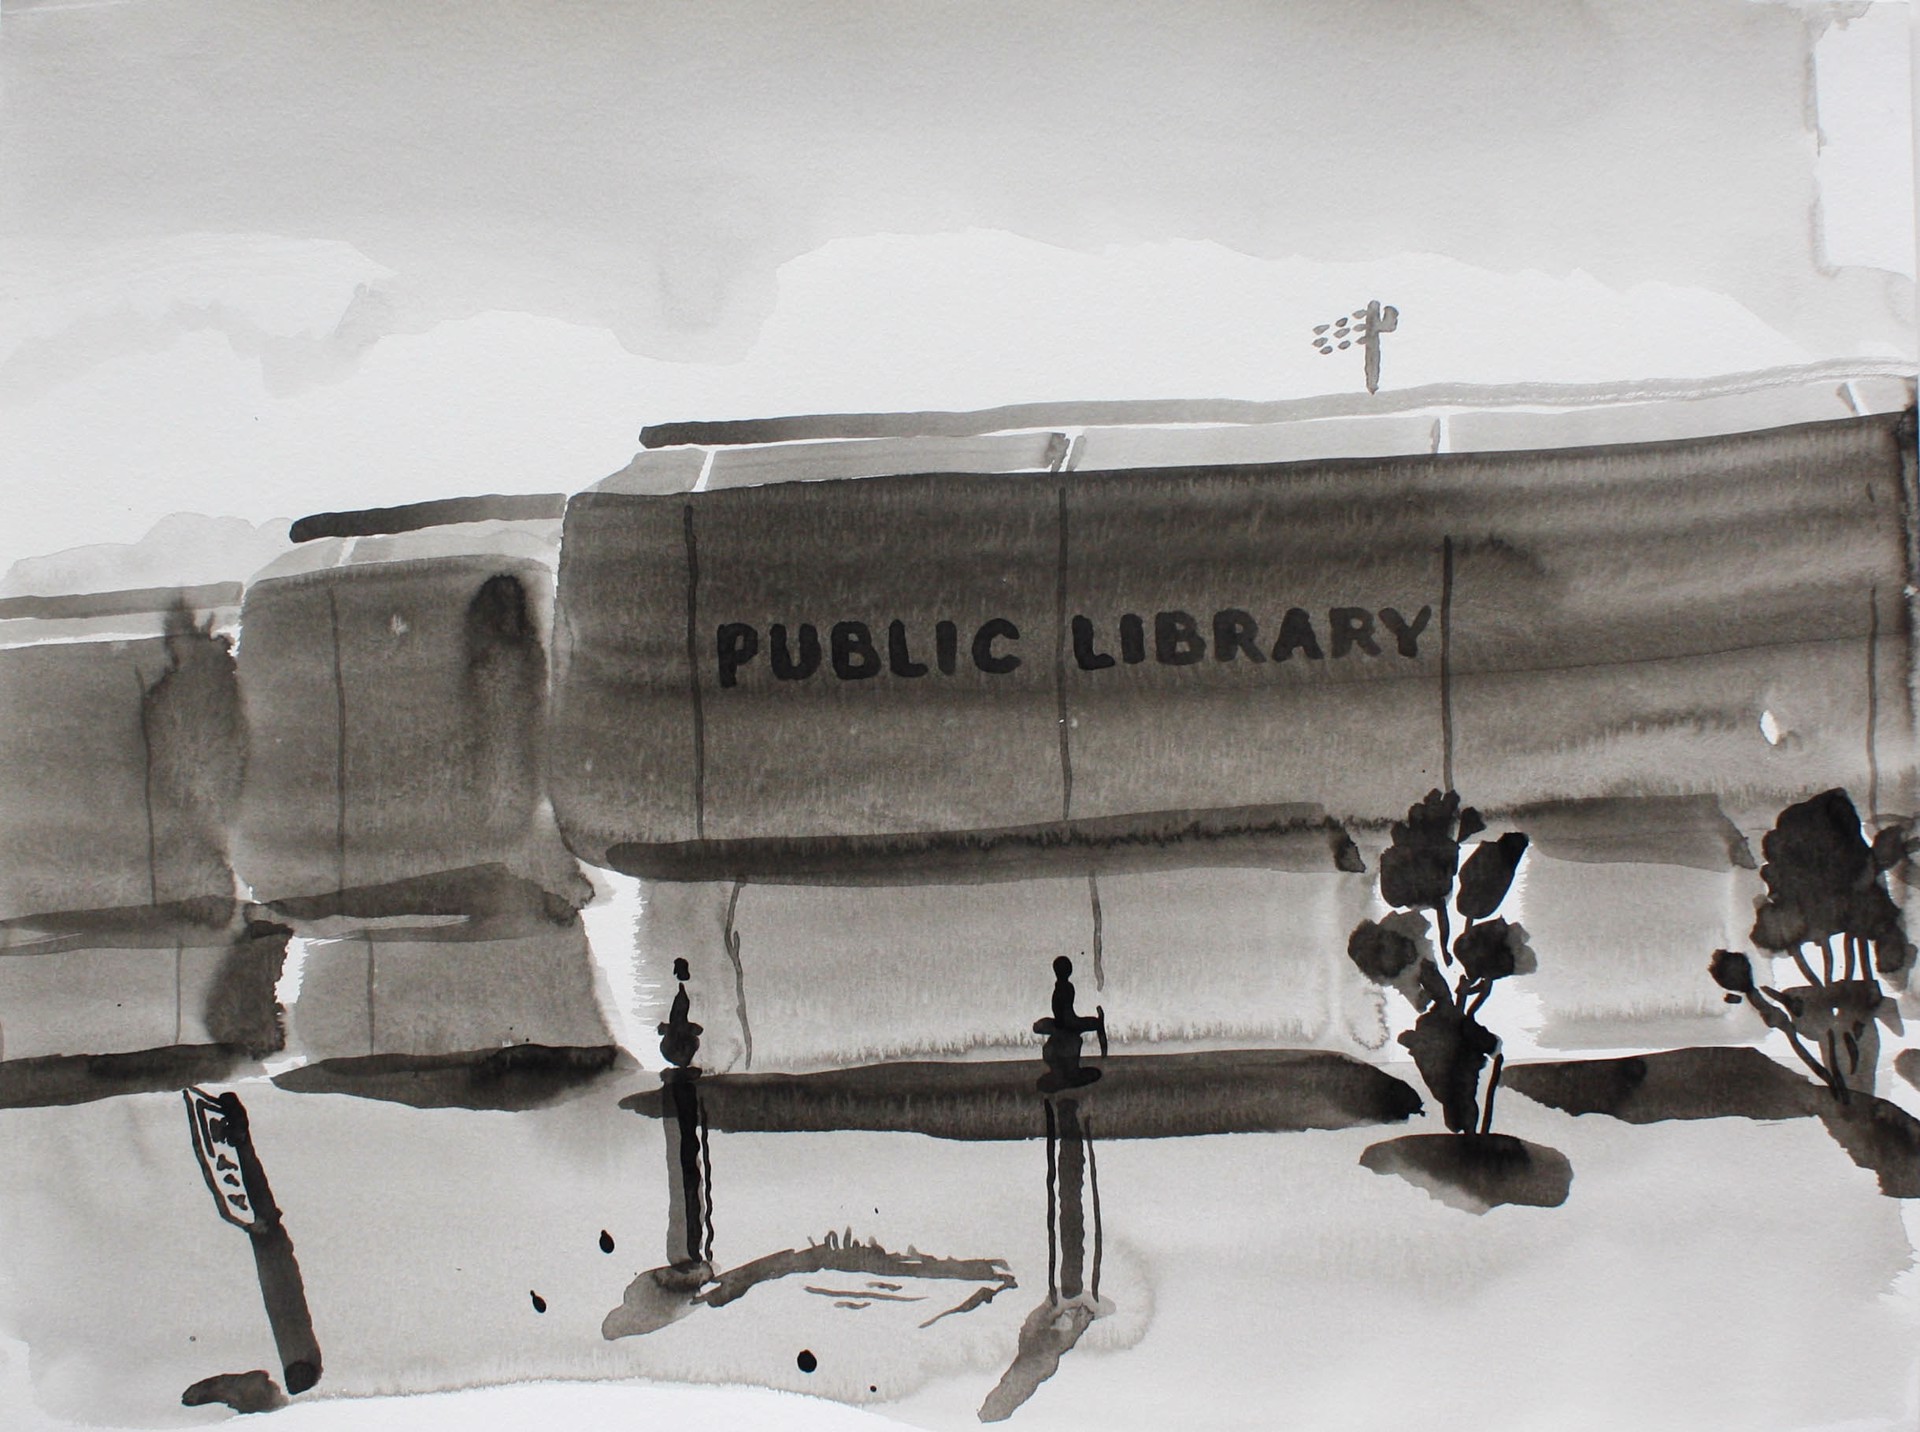 Nashville Public Library by Paul Collins